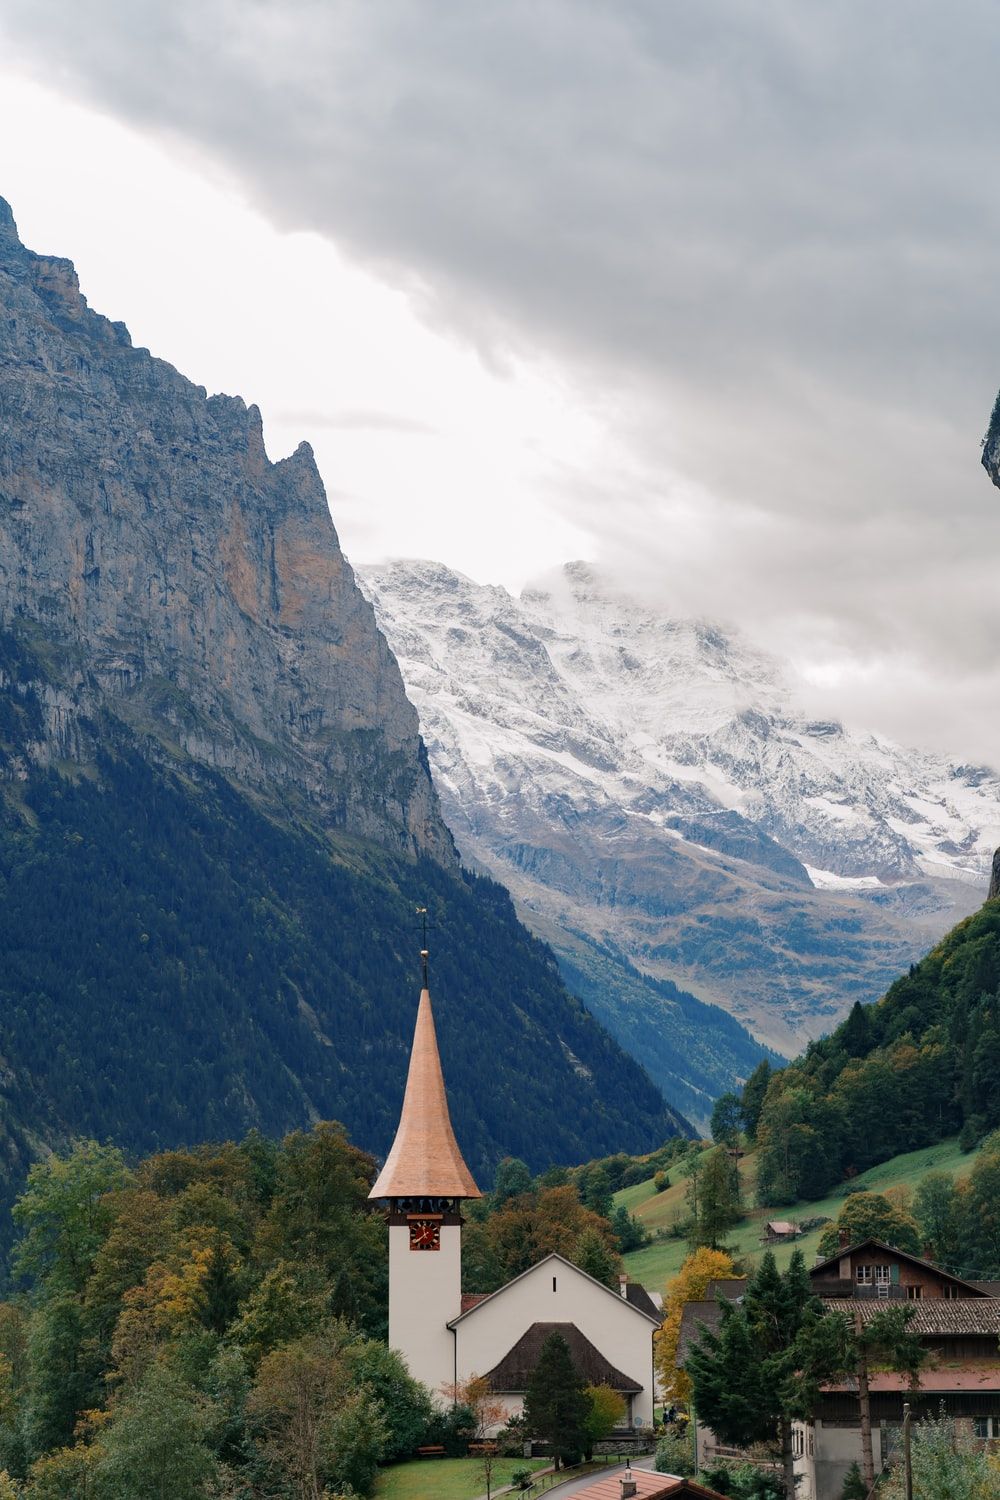 Lauterbrunnen Switzerland Picture. Download Free Image